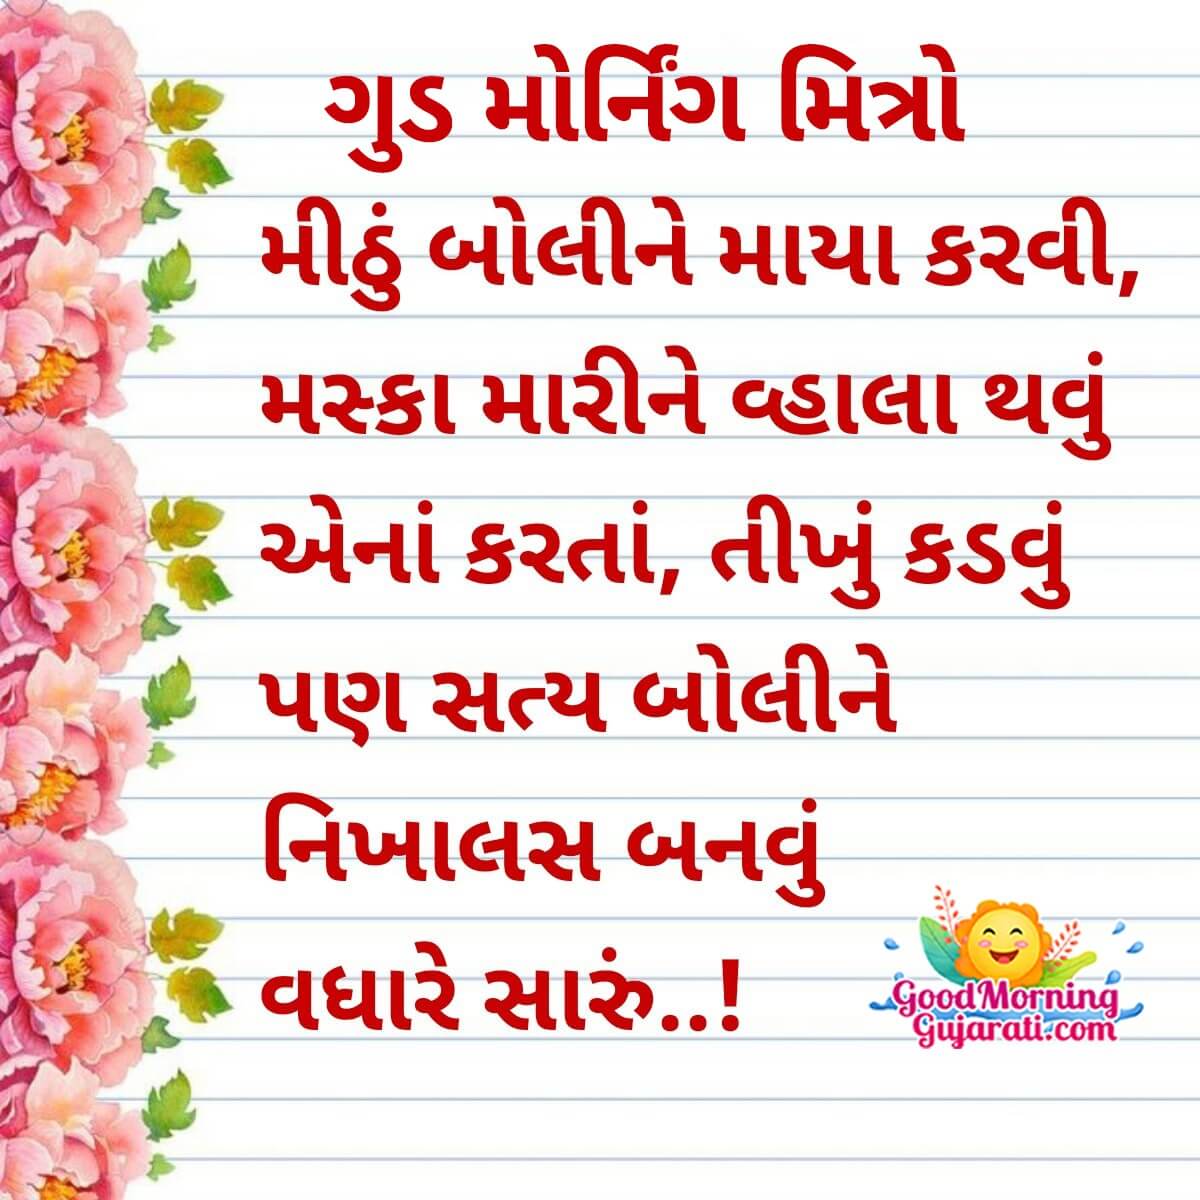 Good Morning Gujarati Message To Friend